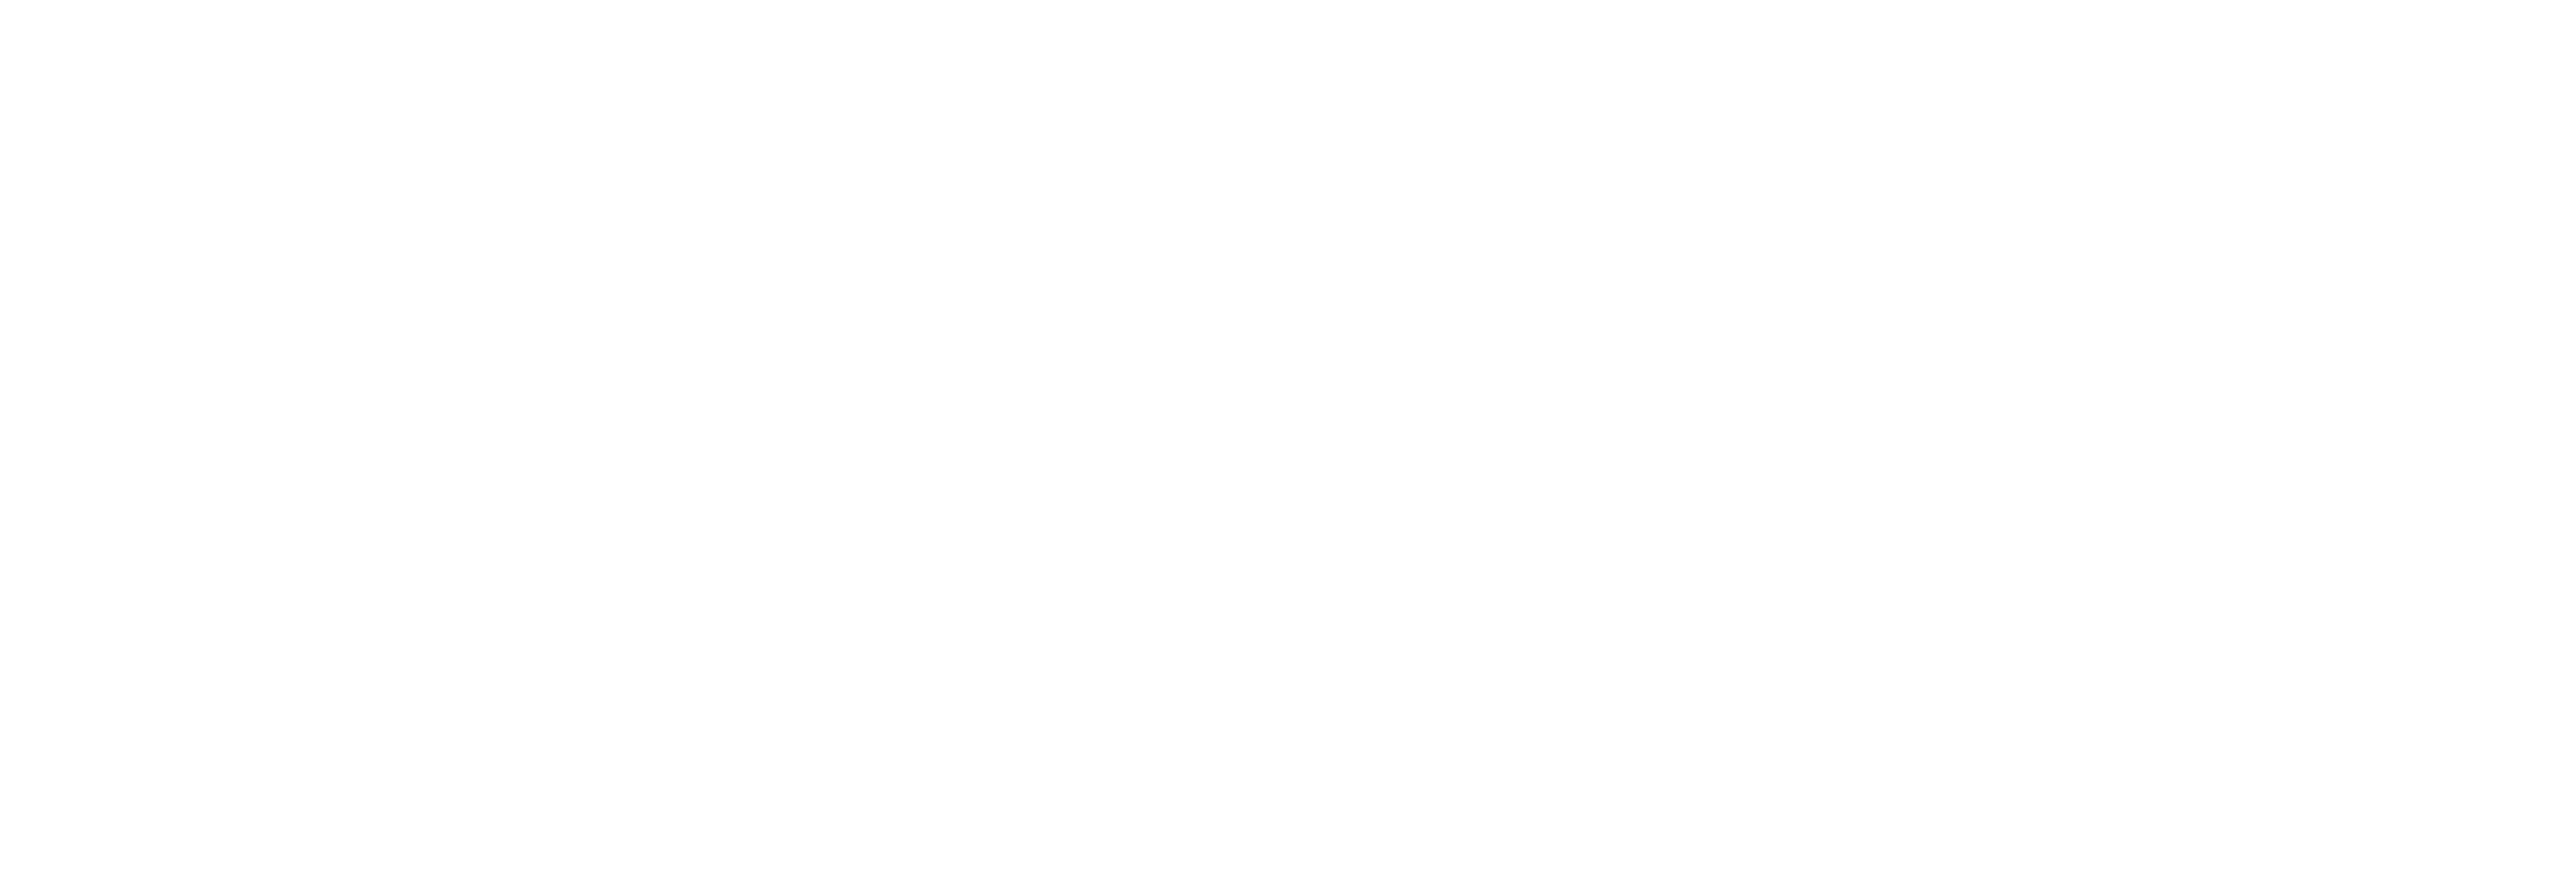 AniCura San Vicente Hospital Veterinario logo